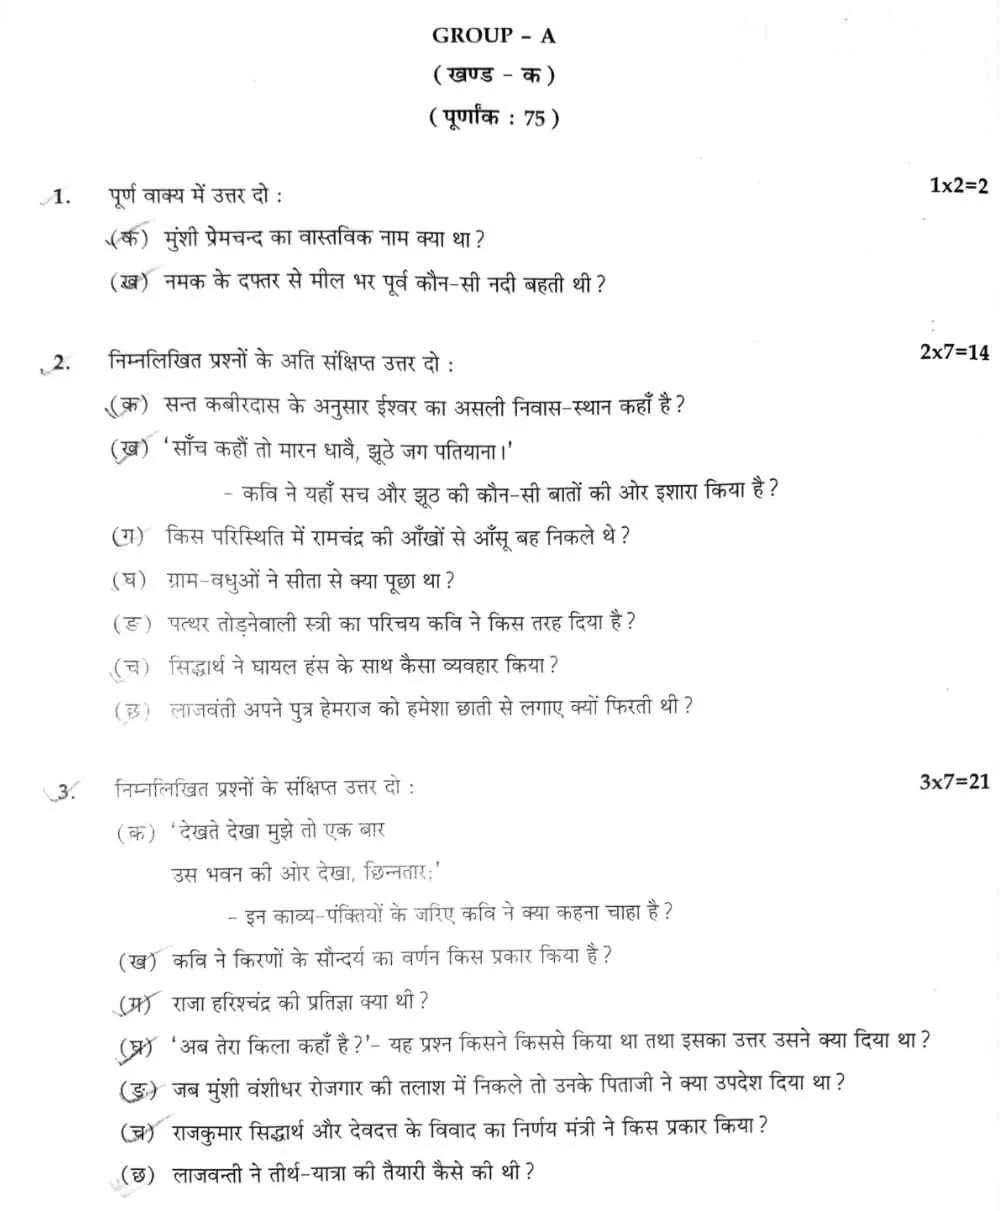 AHSEC Class 12 Hindi (MiL) Question Paper 2020 Assam 10th Board